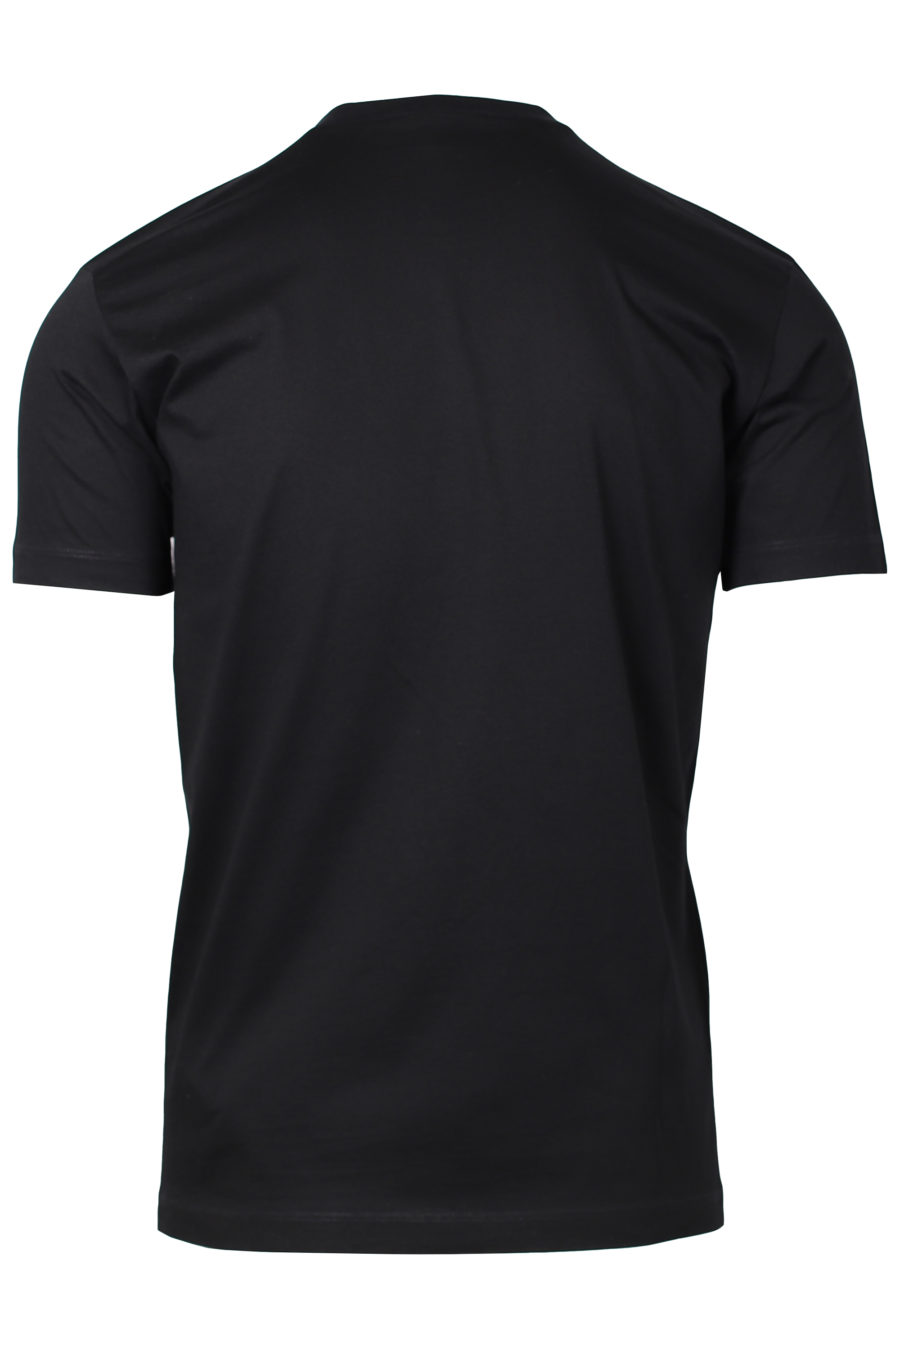 Camiseta negra con logo "Icon" vertical - IMG 2216